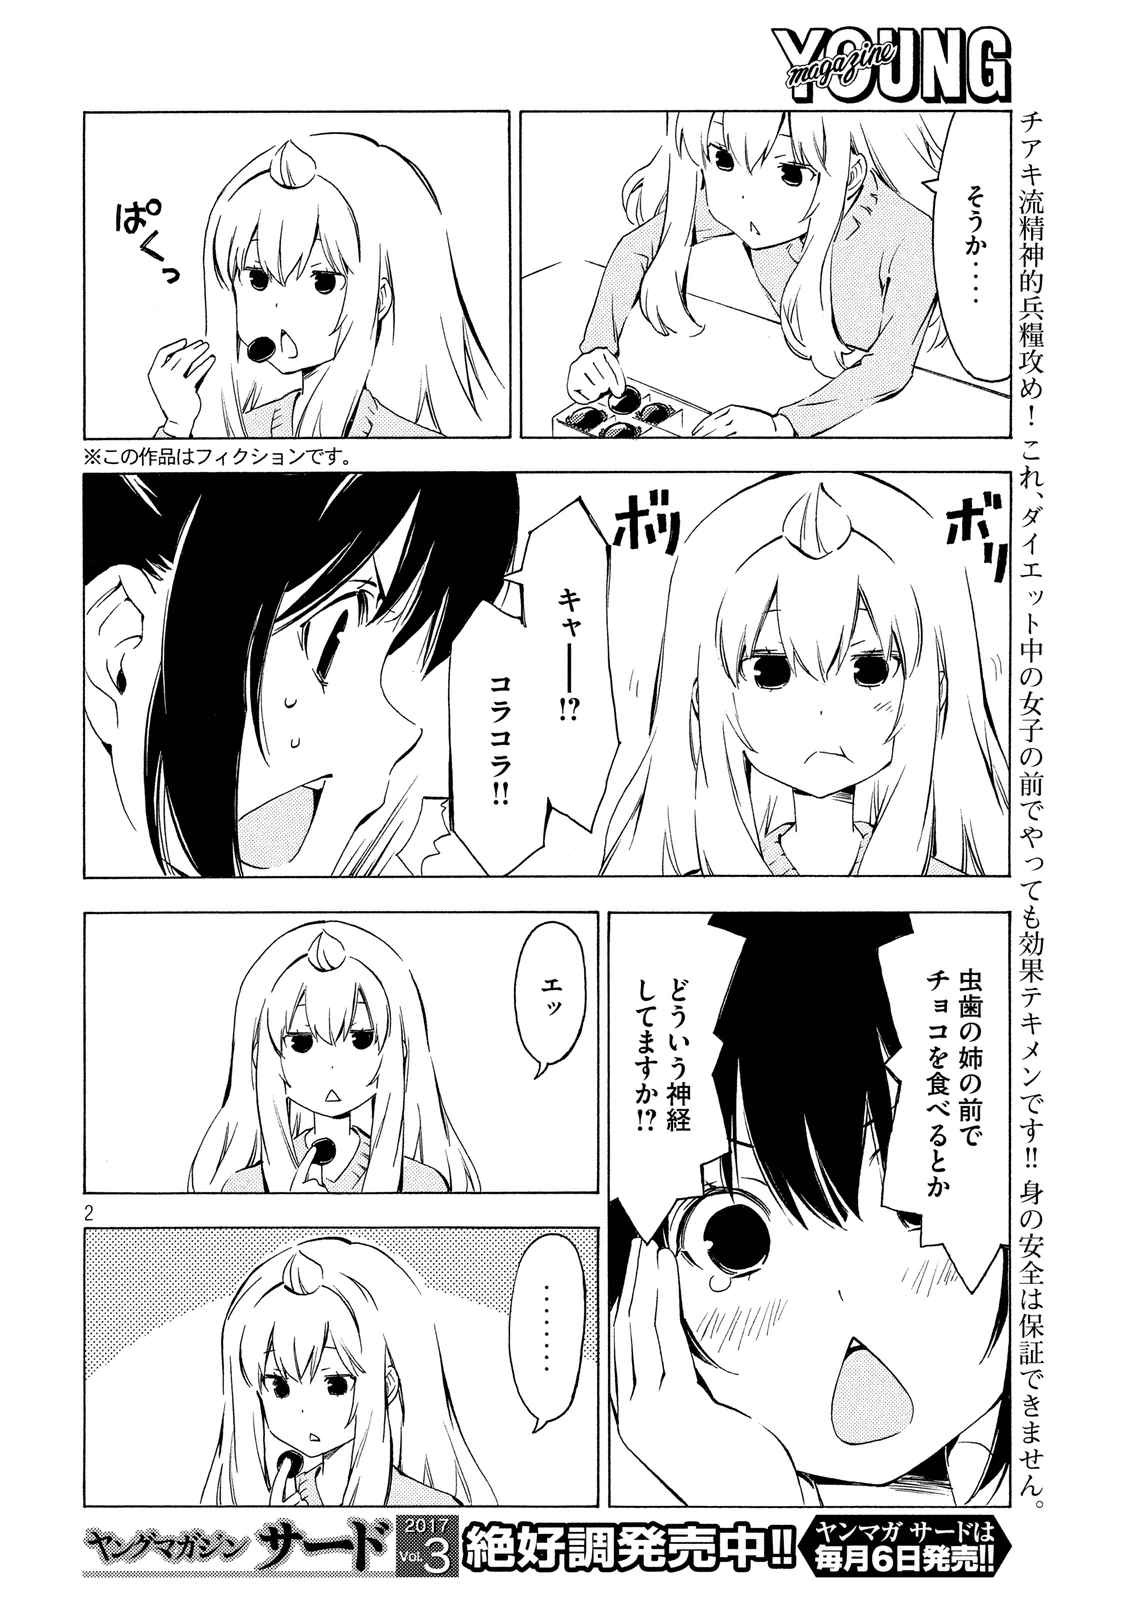 Minami-ke - Chapter 311 - Page 2